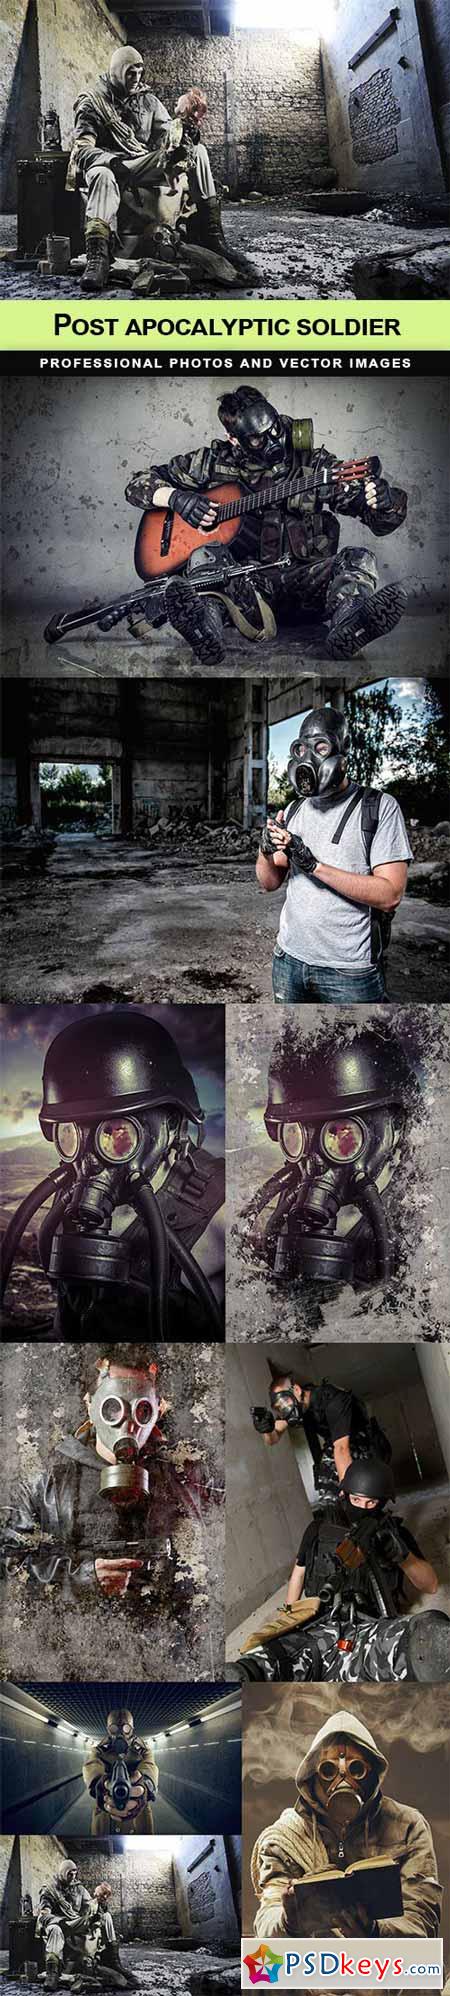 Post apocalyptic soldier - 9 UHQ JPEG